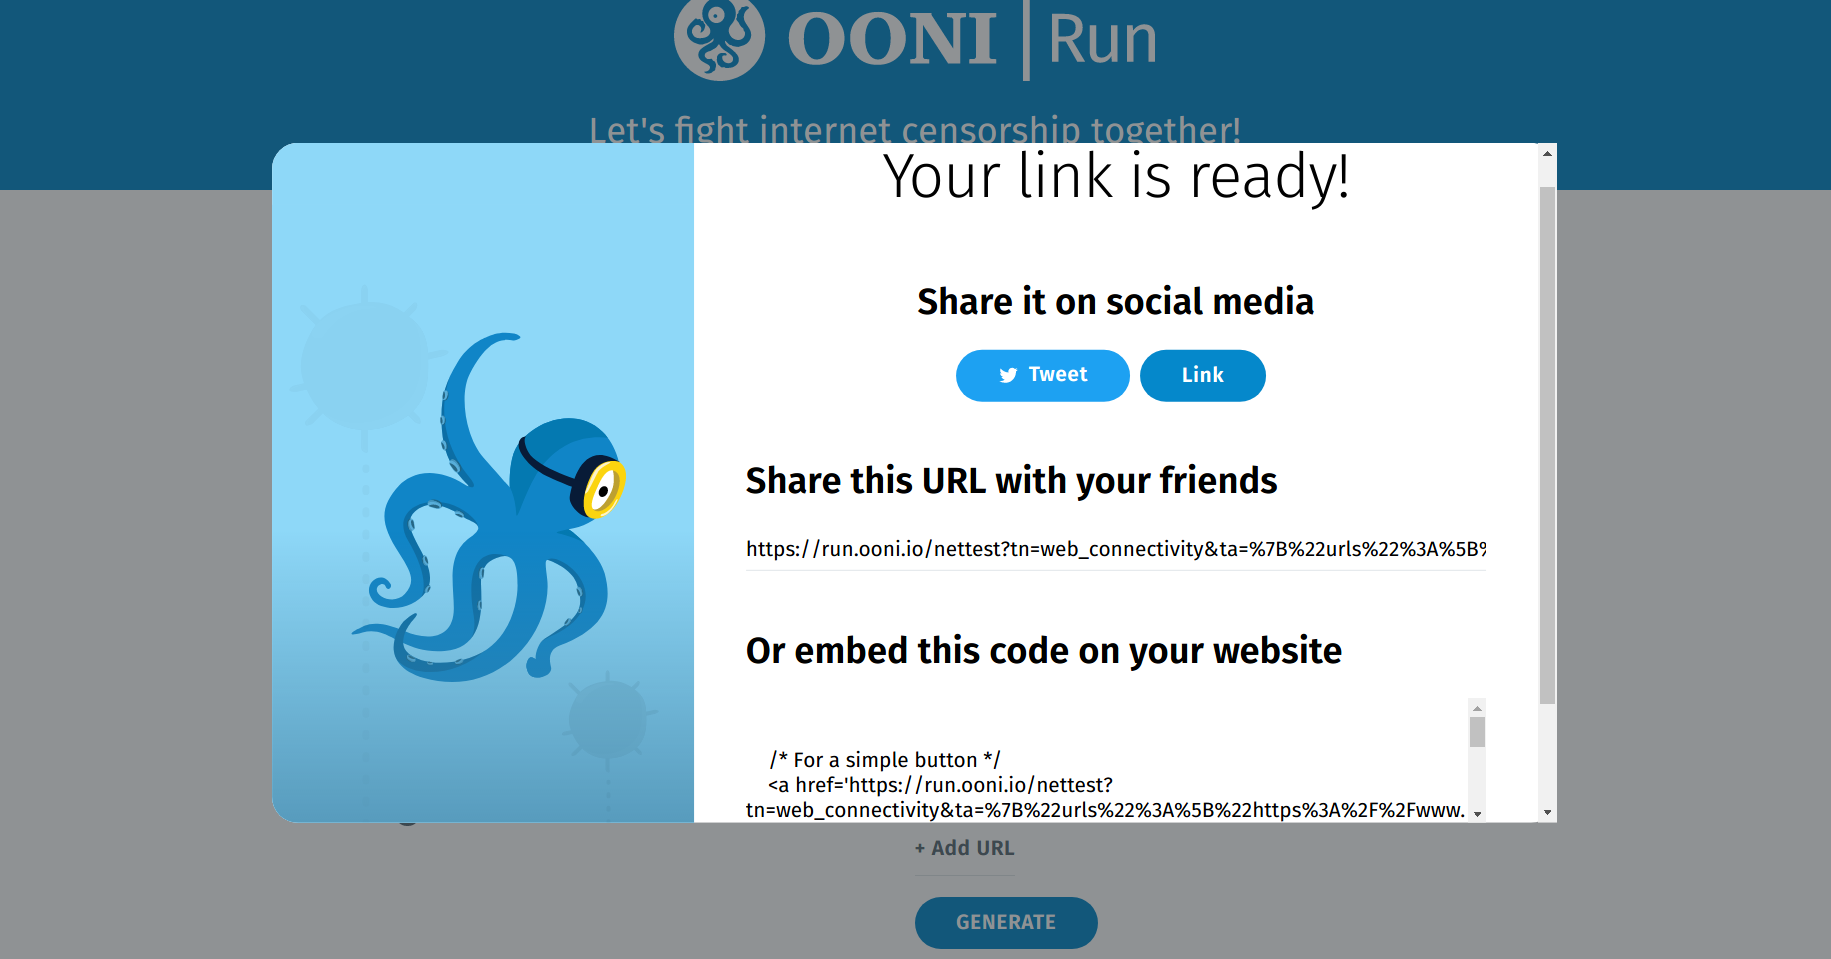 OONI Run: Generating a link